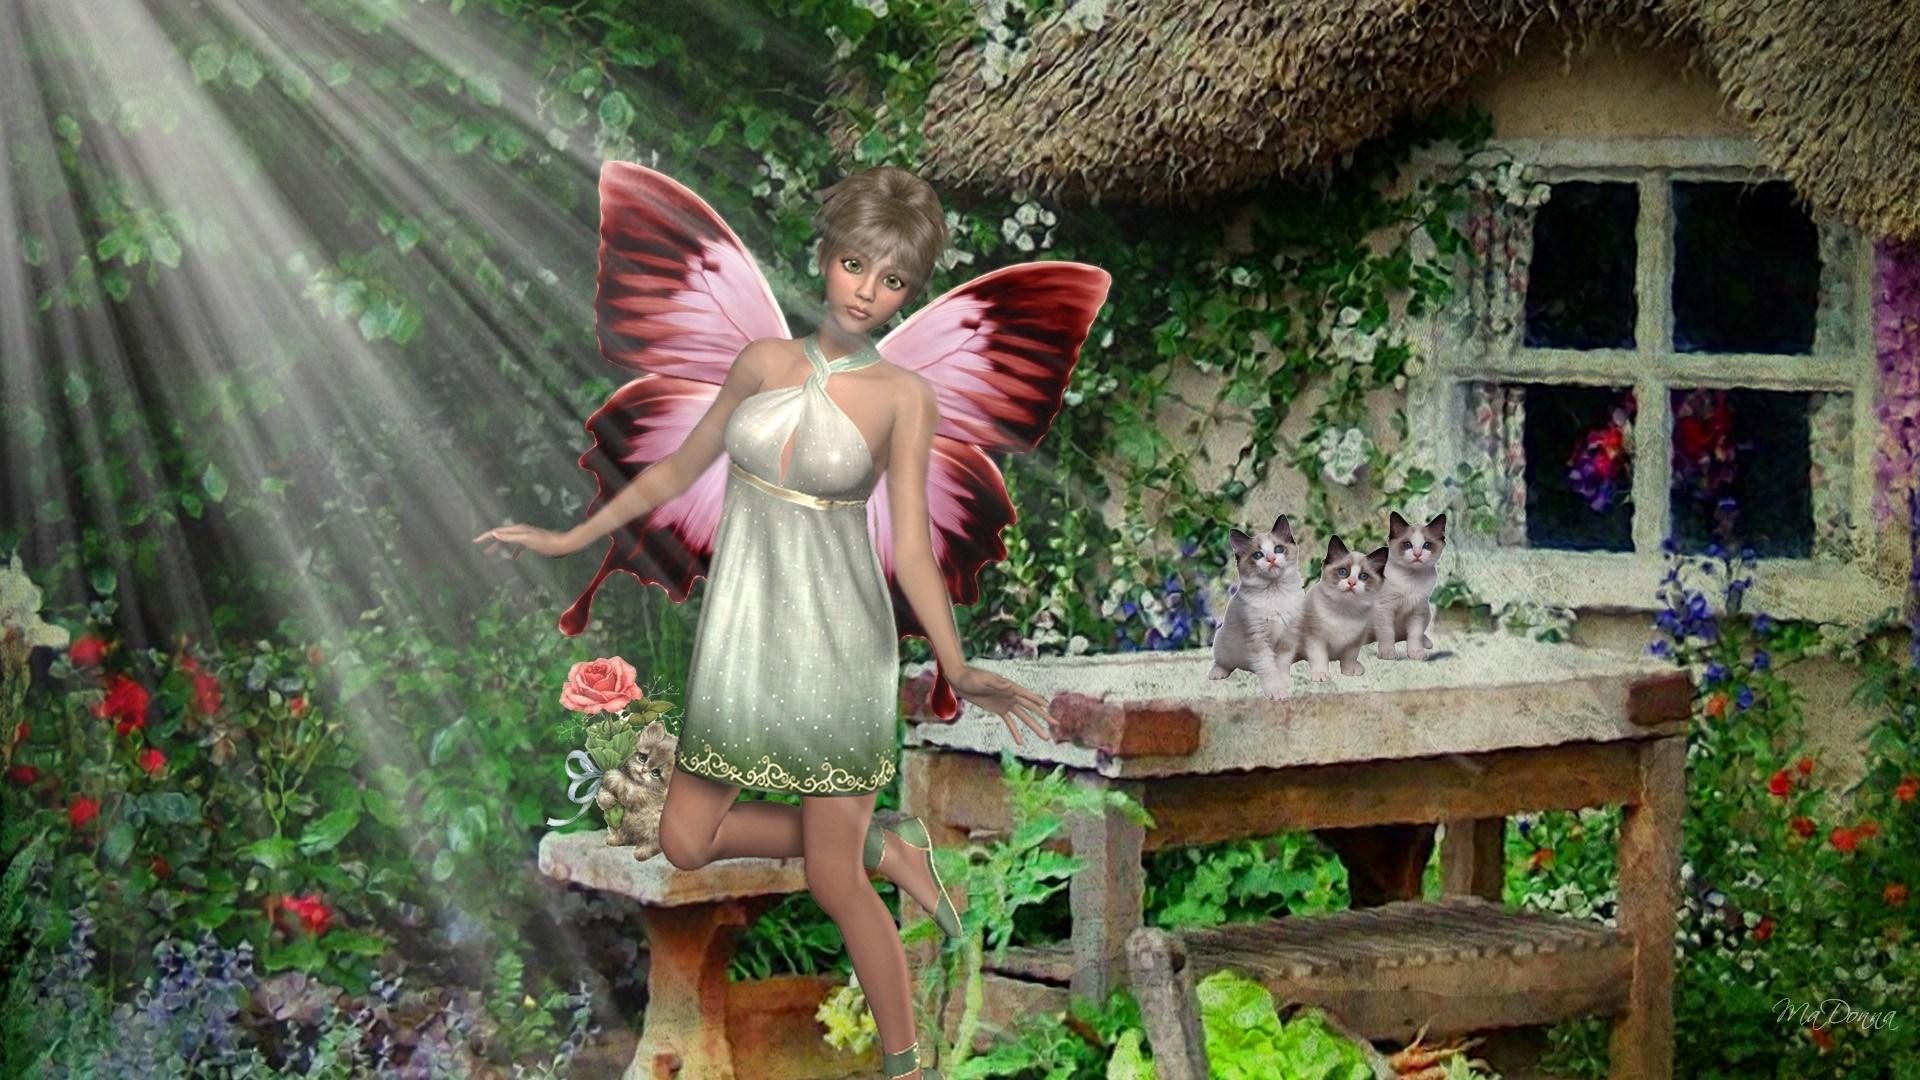 1920x1080 High Resolution Wallpaper fairy JPG 513 kB